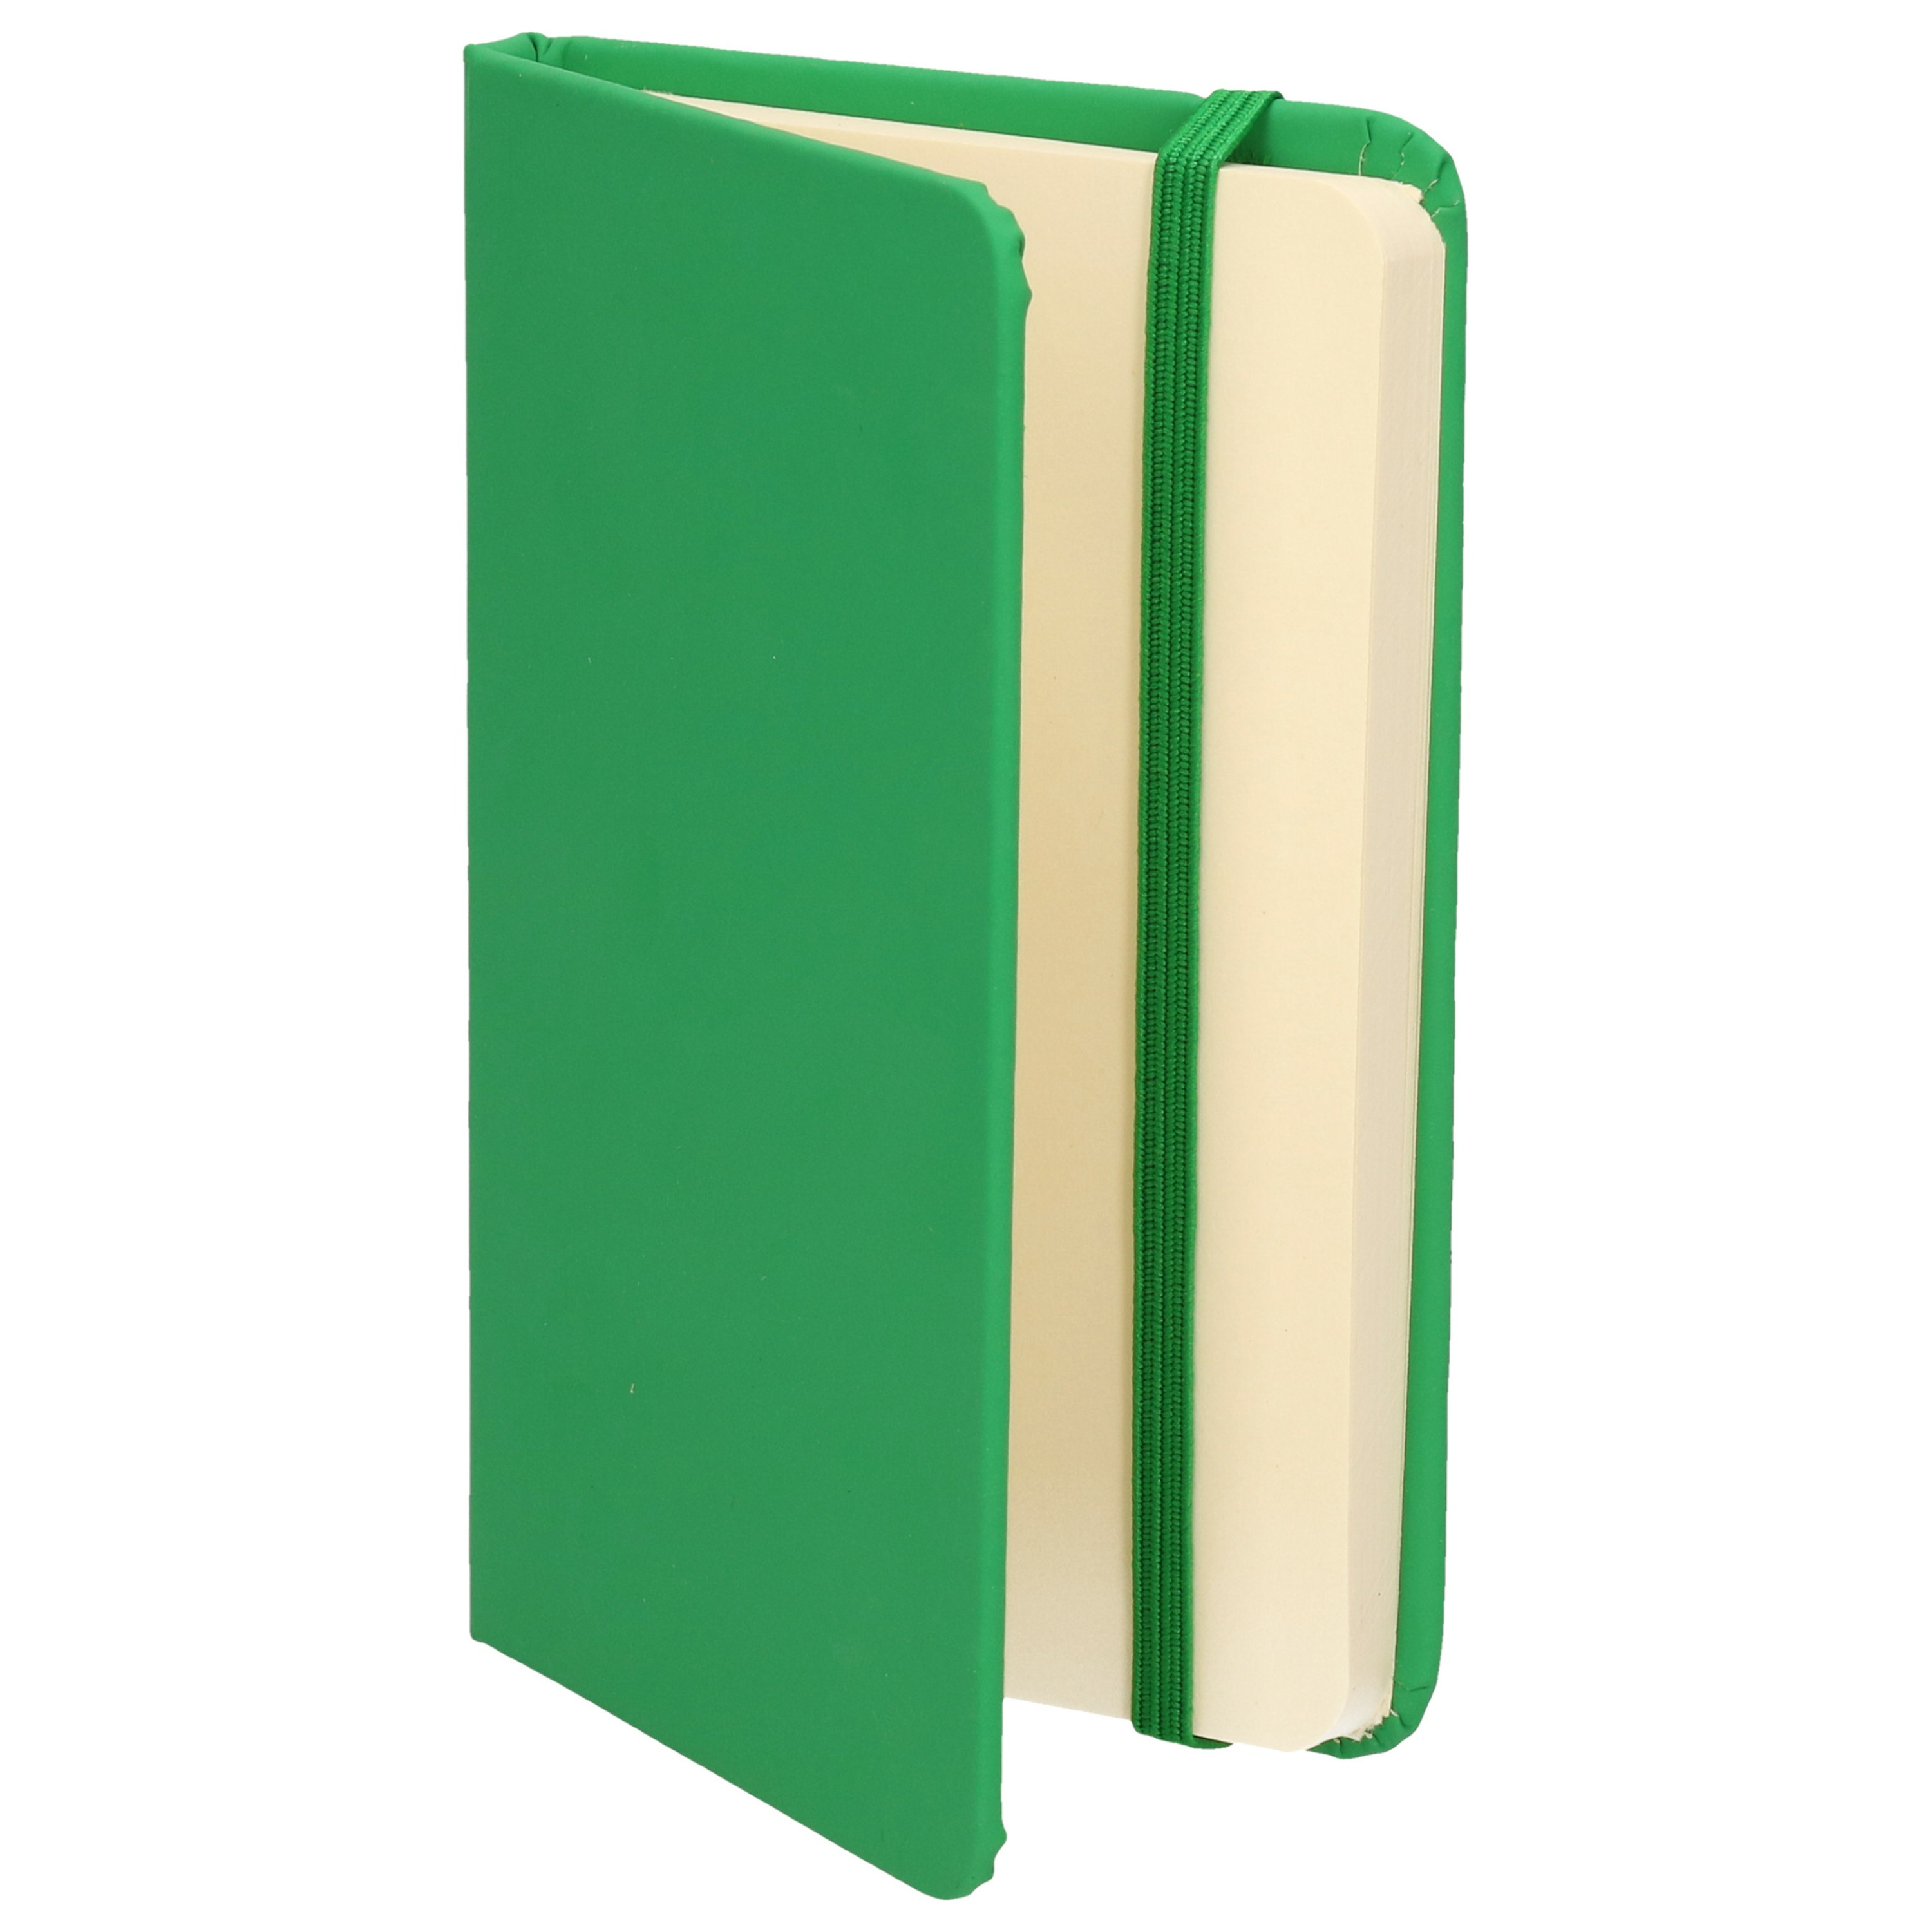 Notitieblokje harde kaft groen 9 x 14 cm